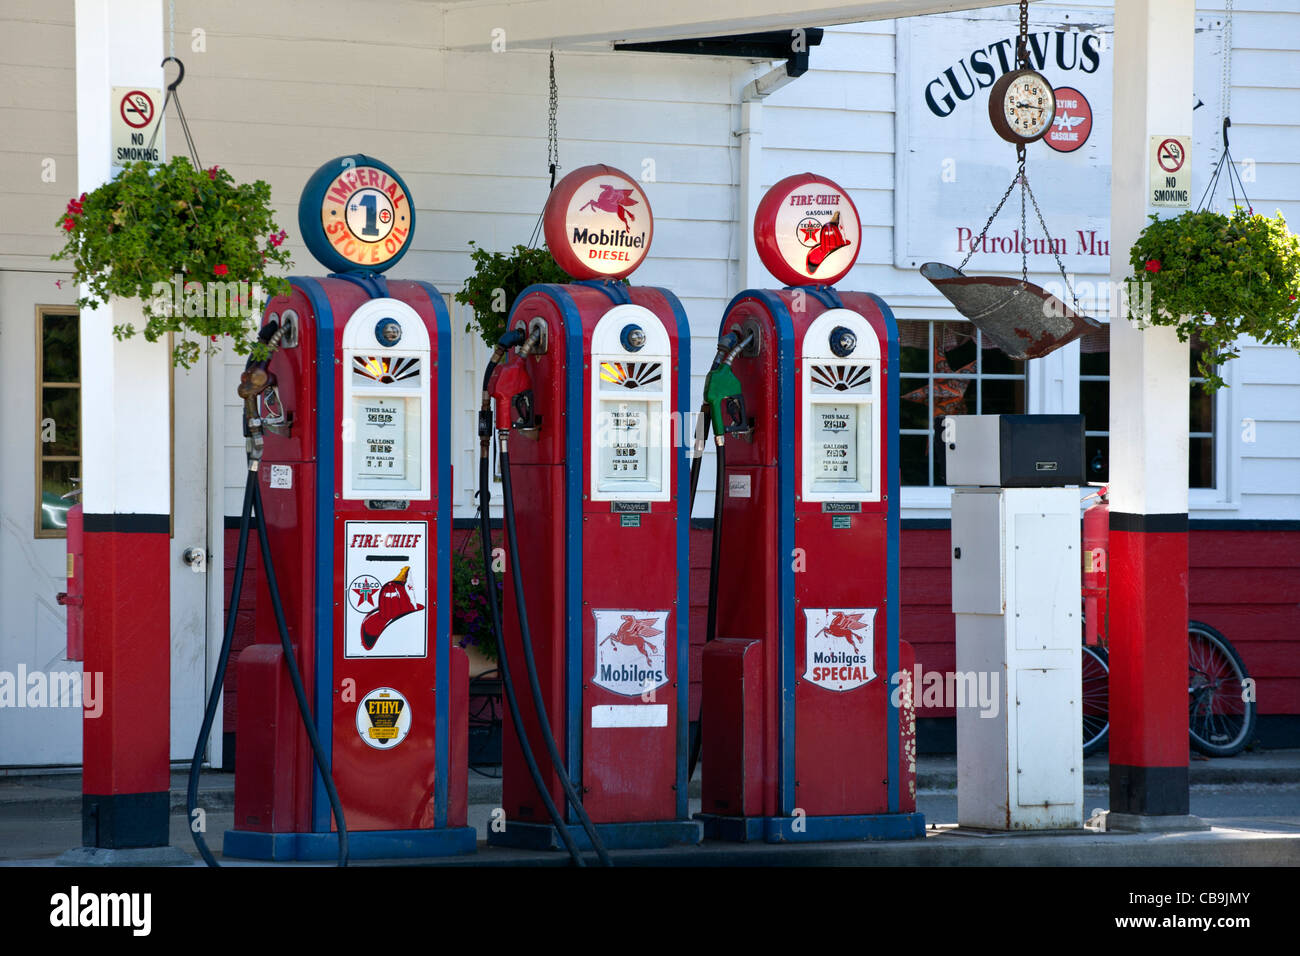 Old petrol station. Gustavus. Glacier Bay. Alaska. USA Stock Photo